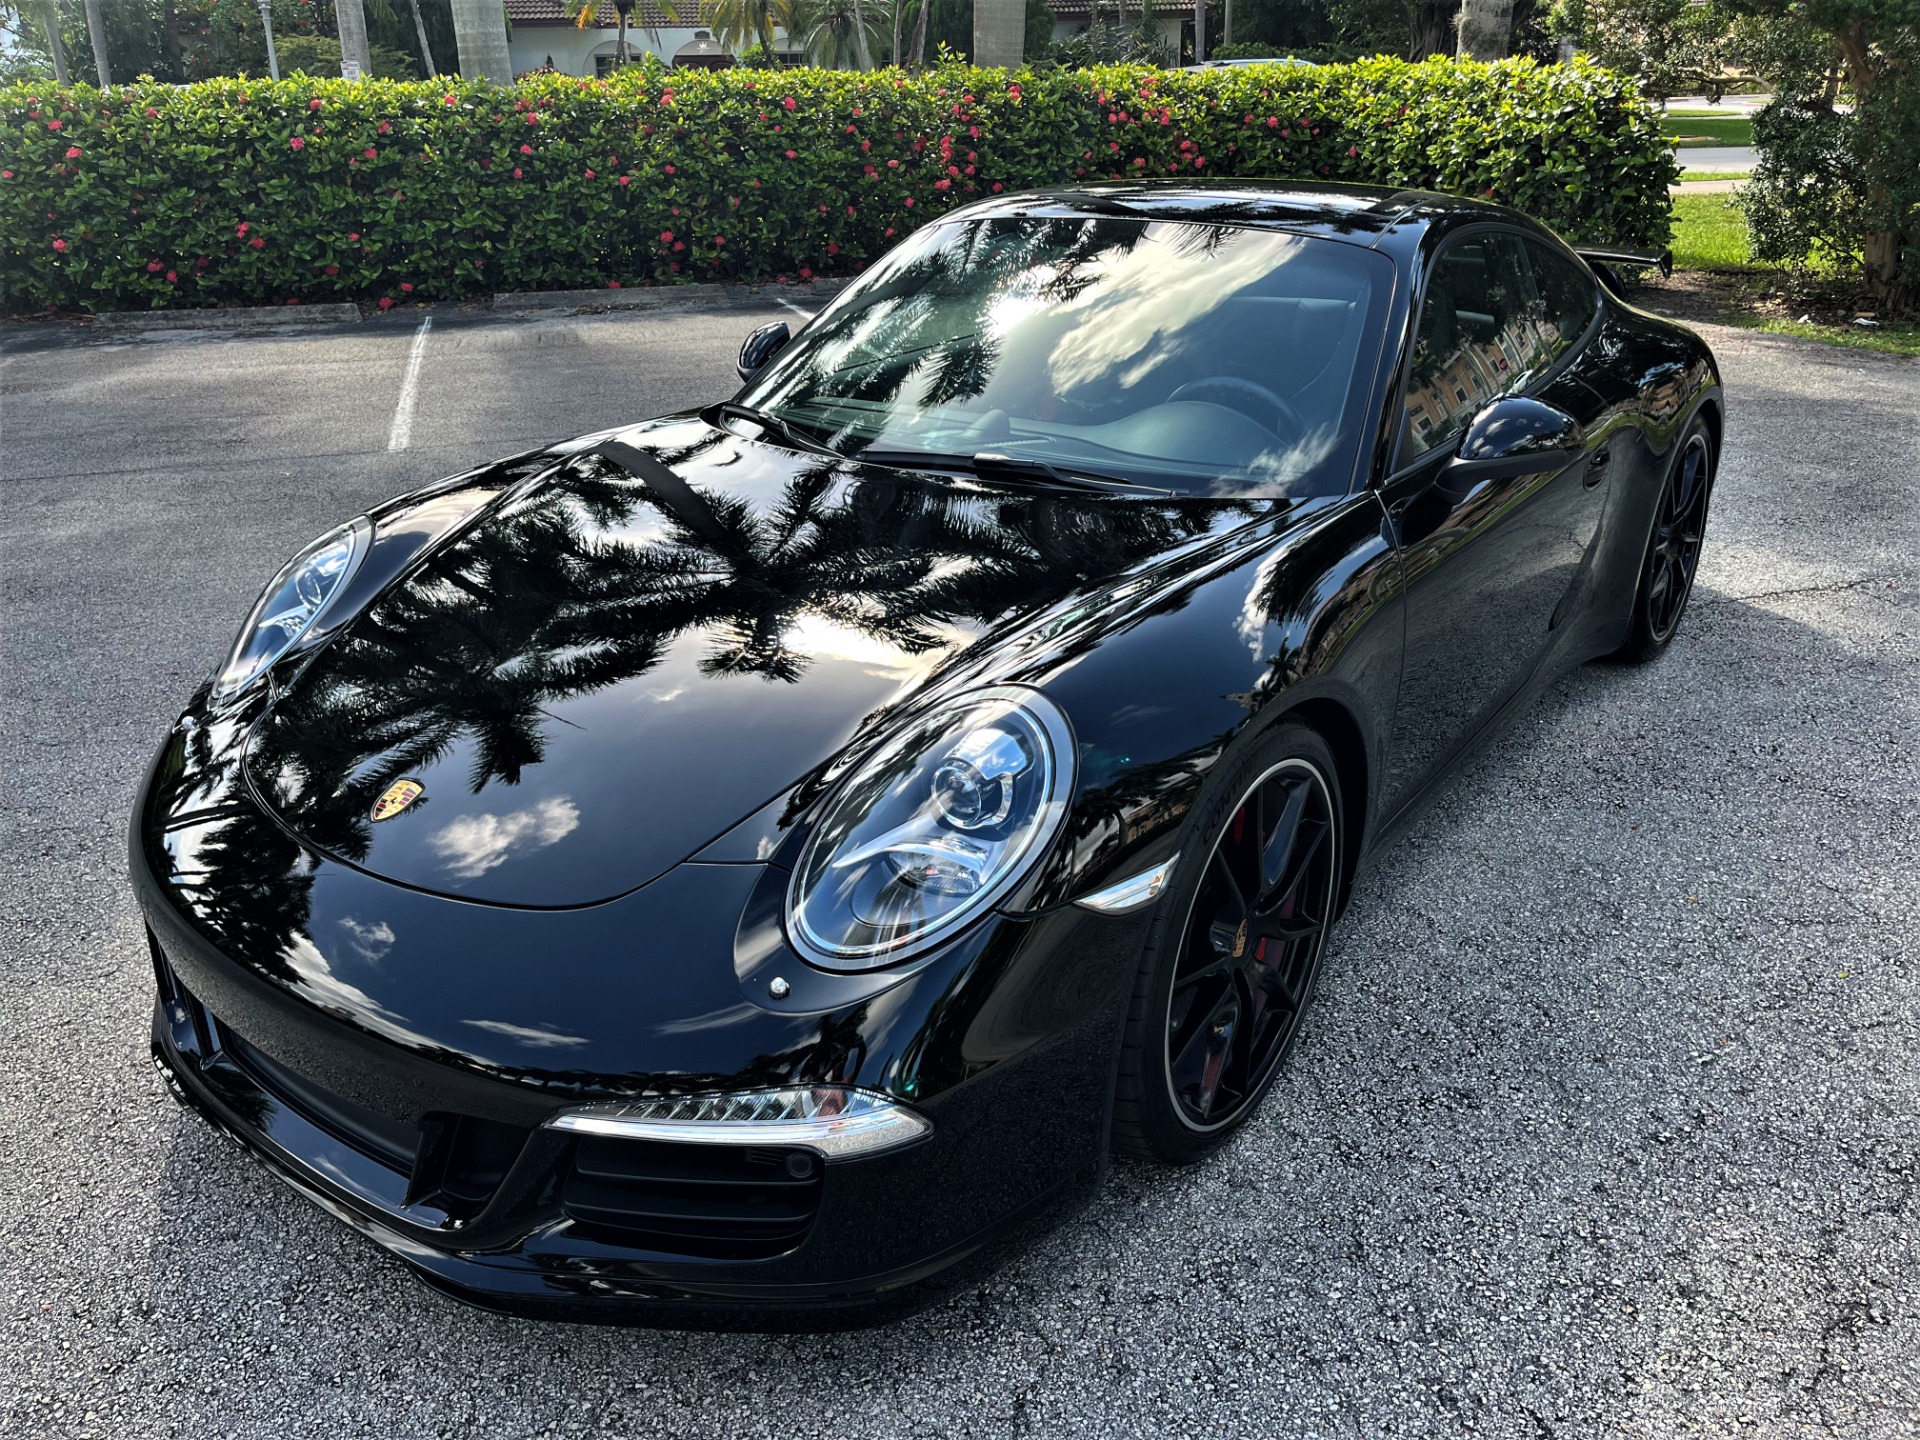 Used 2013 Porsche 911 Carrera S for sale $77,850 at The Gables Sports Cars in Miami FL 33146 3